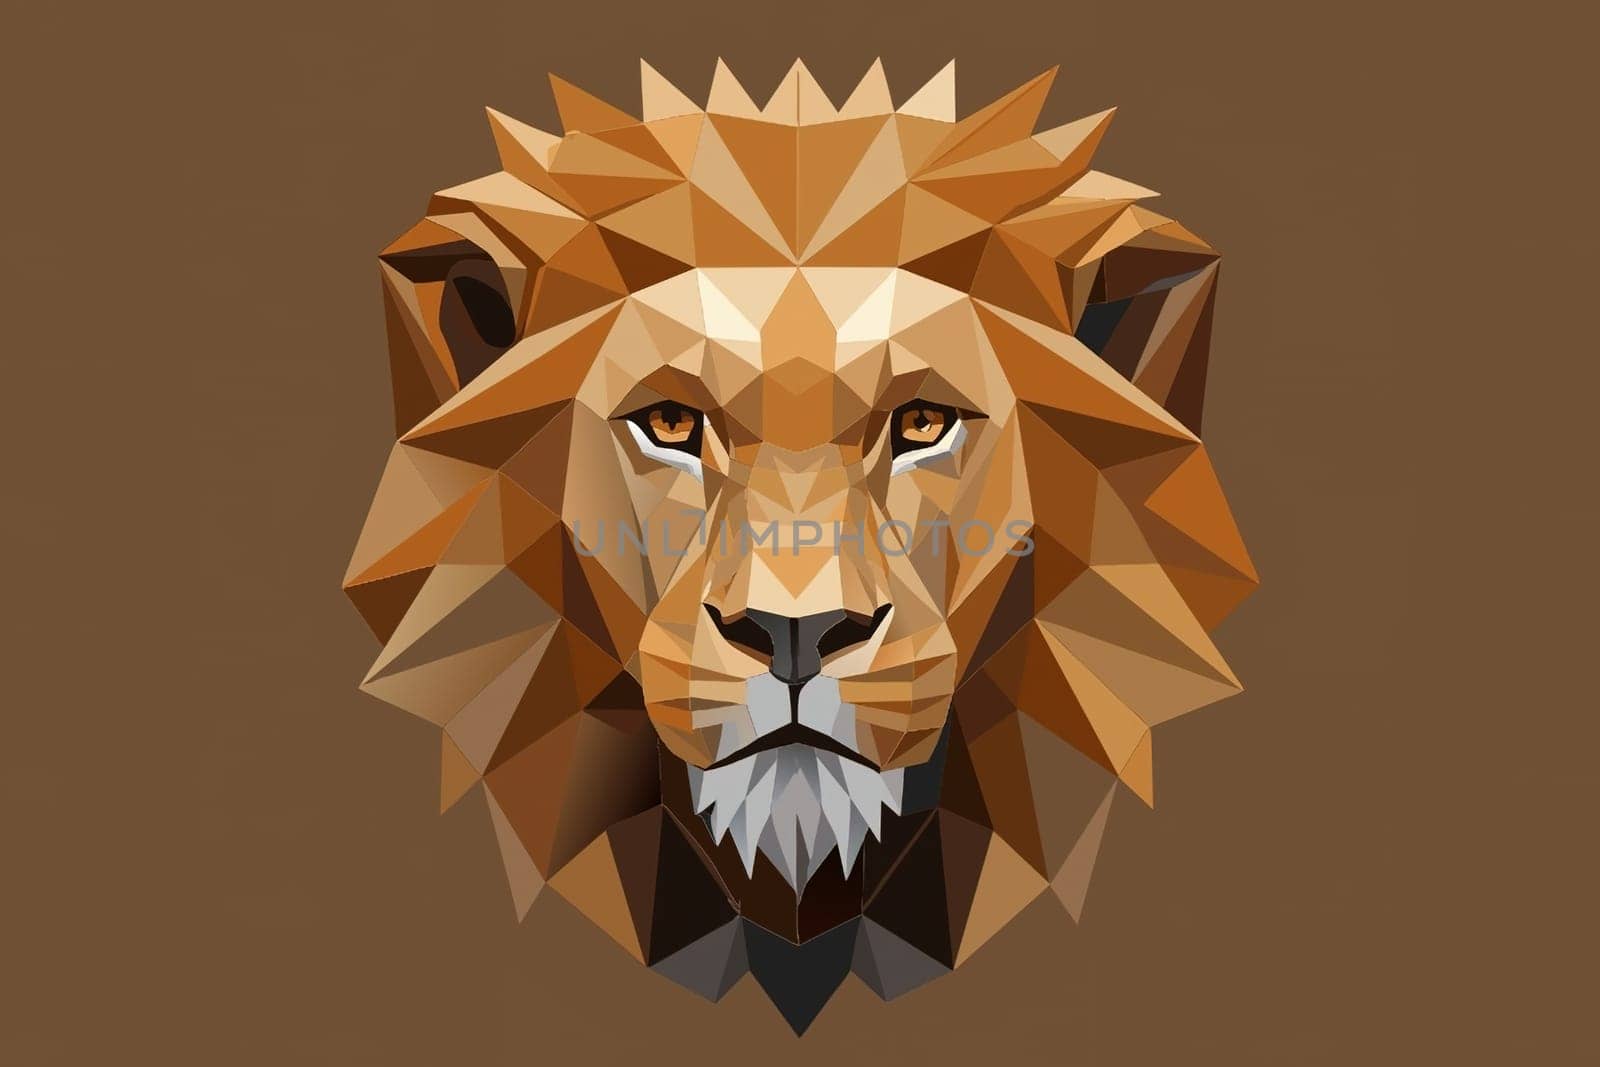 Lion head low poly style vector illustration. by yilmazsavaskandag